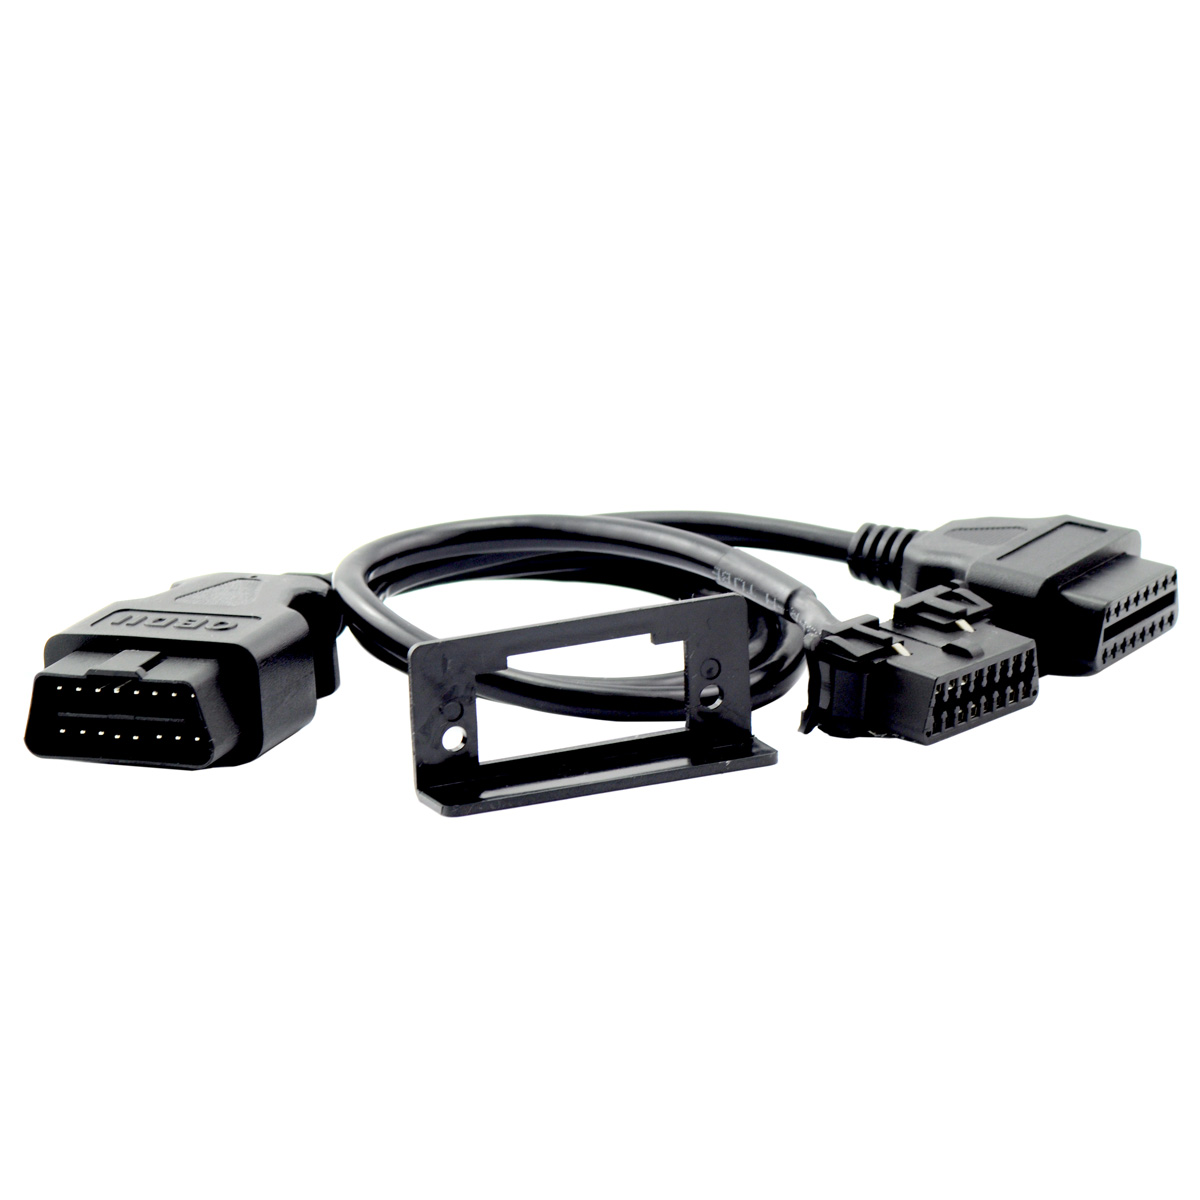 16pin OBDII YSplitter Cable with Underdash Bracket for KIA Mazda